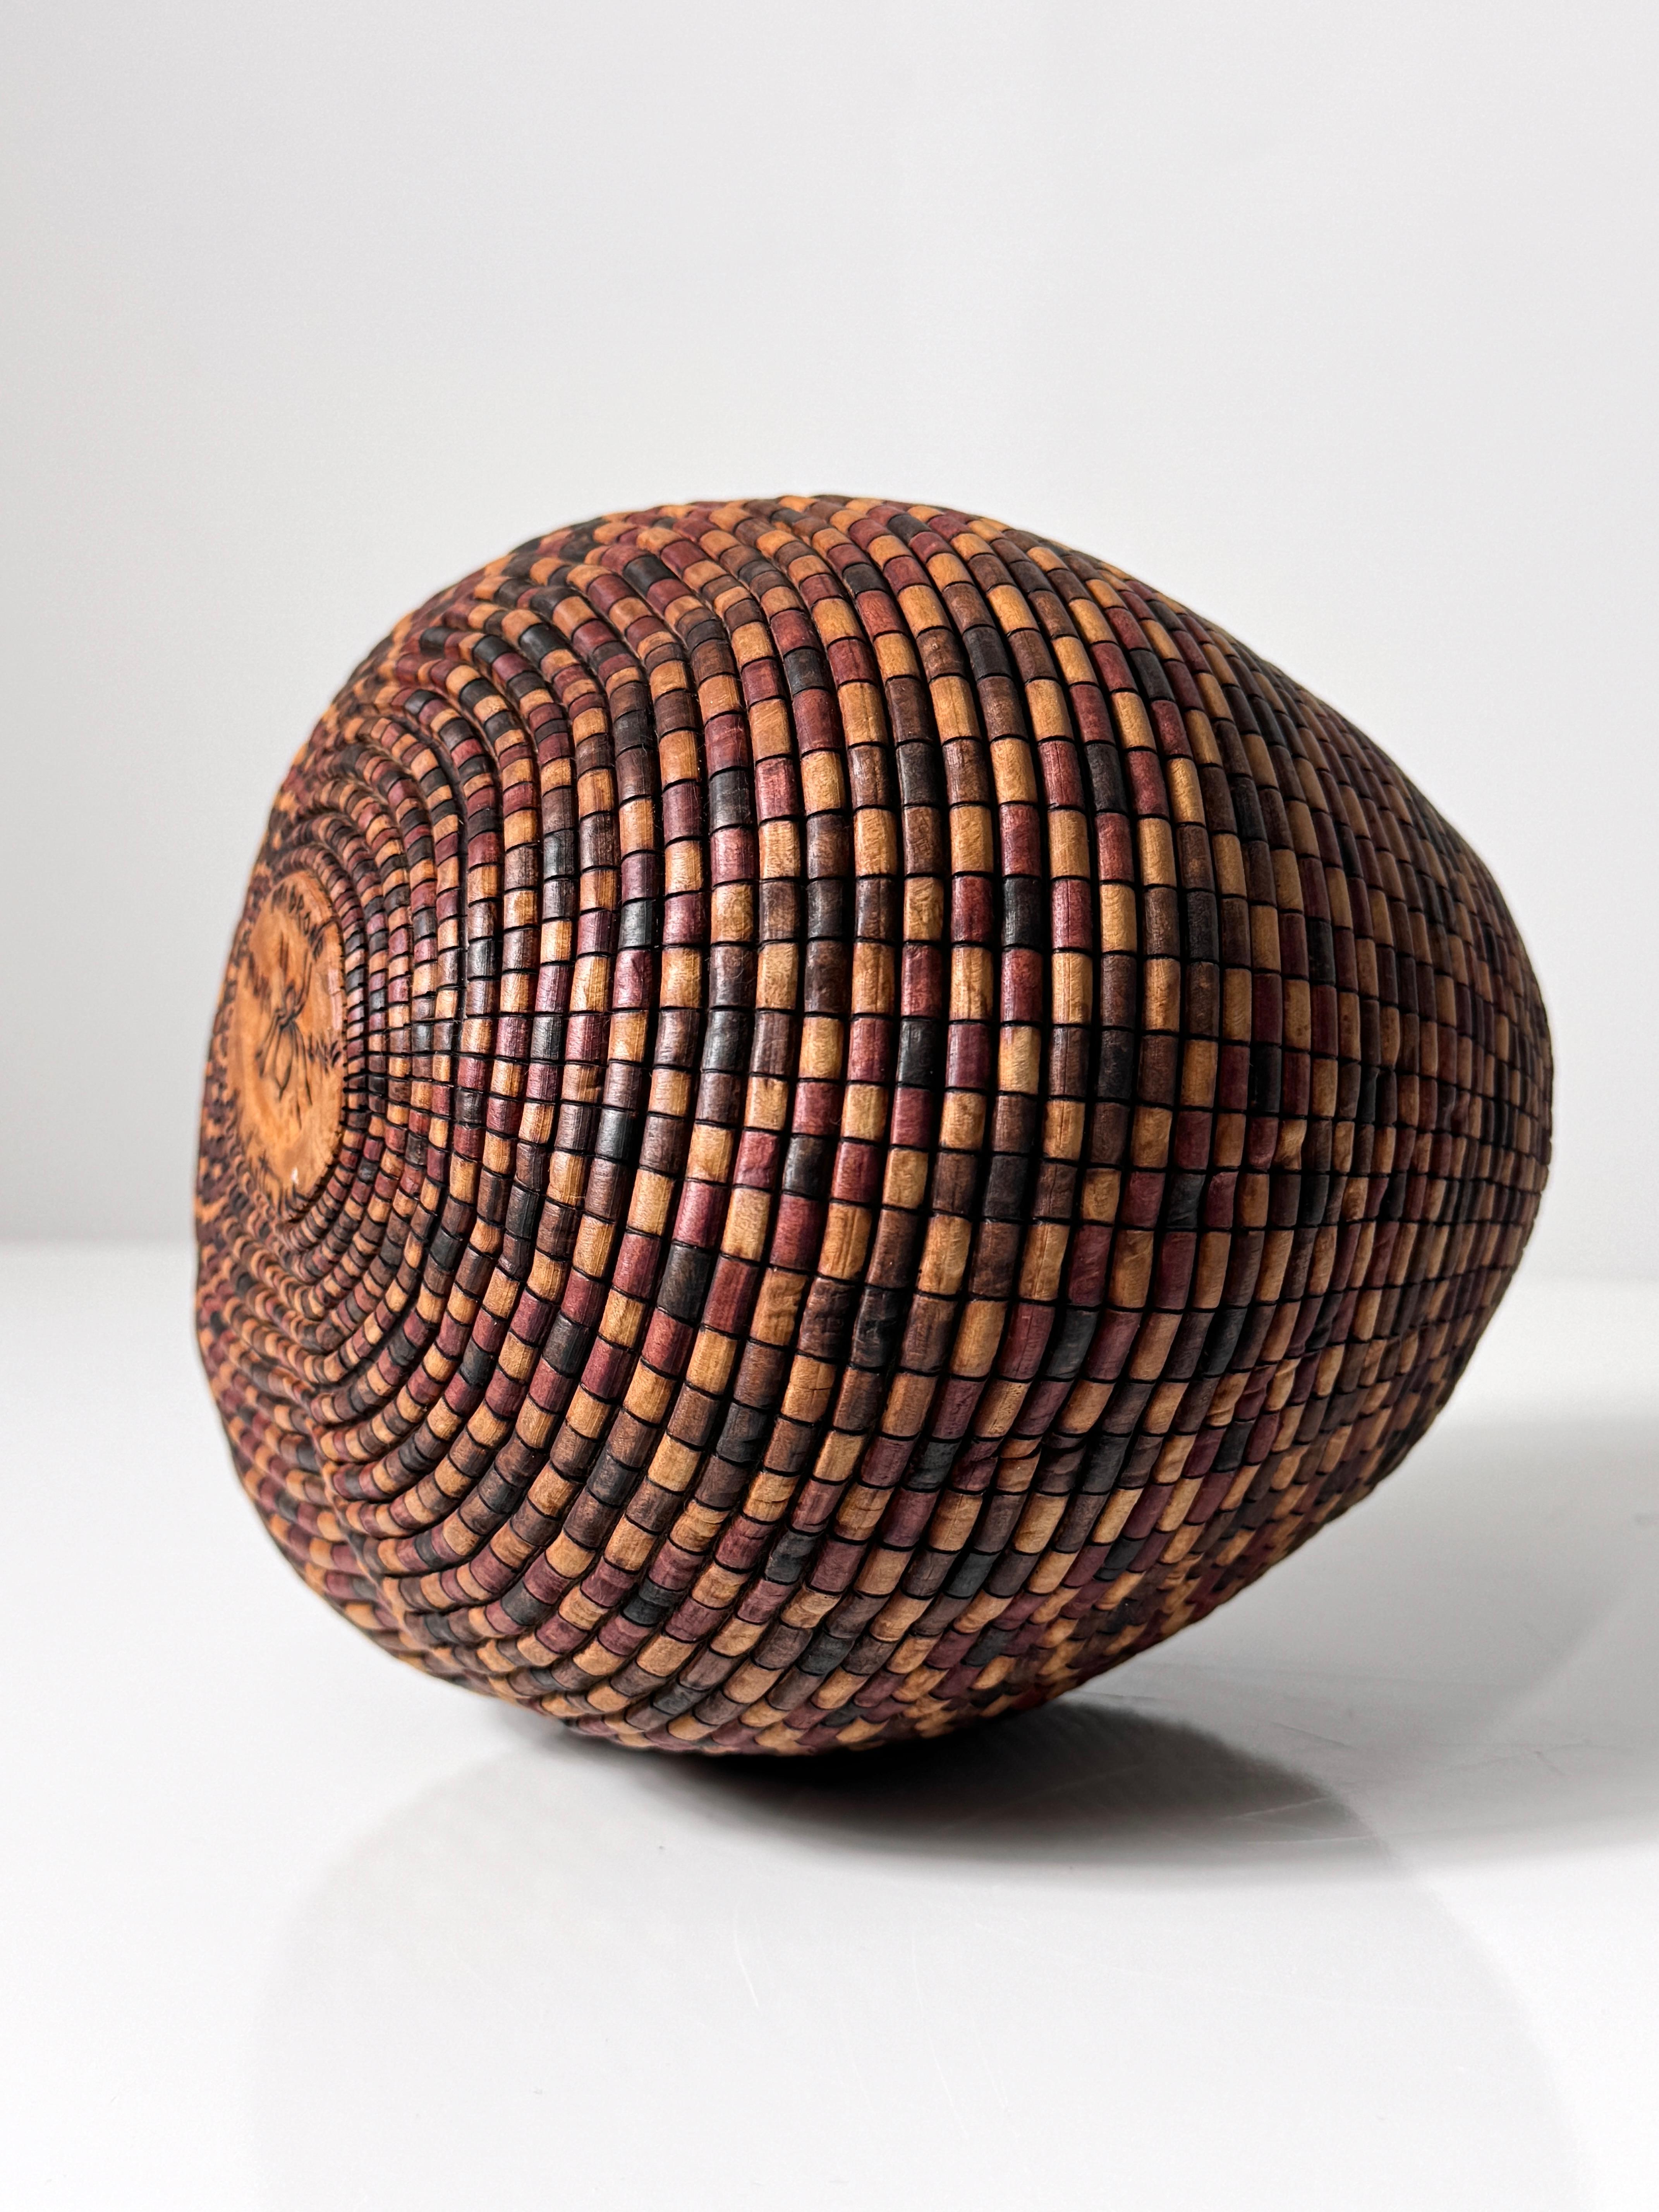 American Studio Turned Wood Basket Illusion Vessel Bowl by David Nittmann 1990s For Sale 3